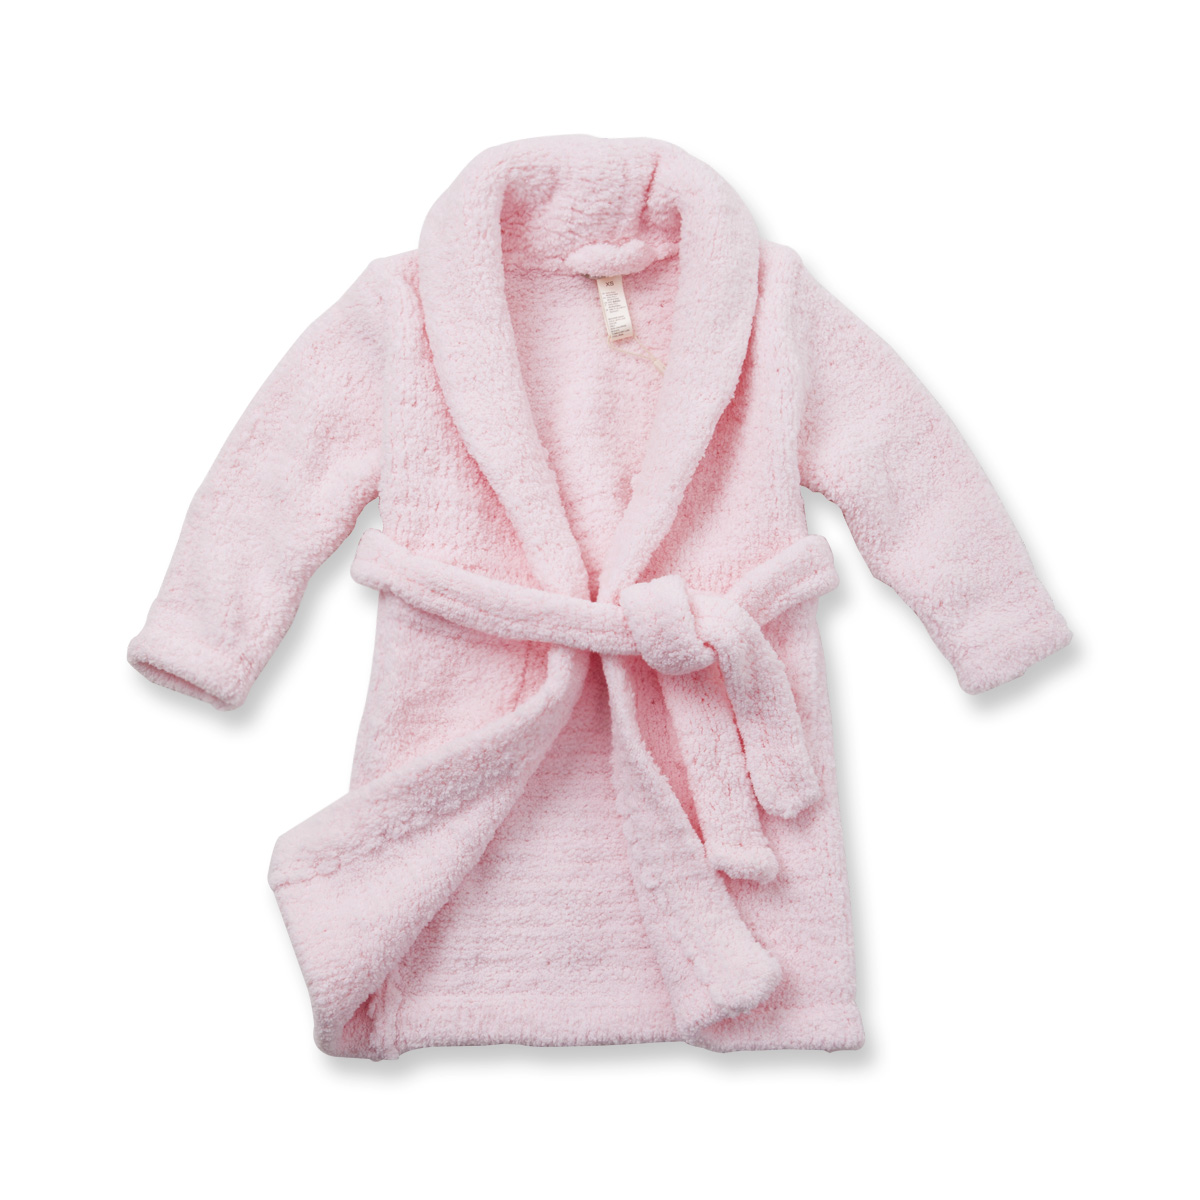 Davebella 2012 autumn and winter ultra soft chenille baby thermal sleepwear robe baby sleepwear 138